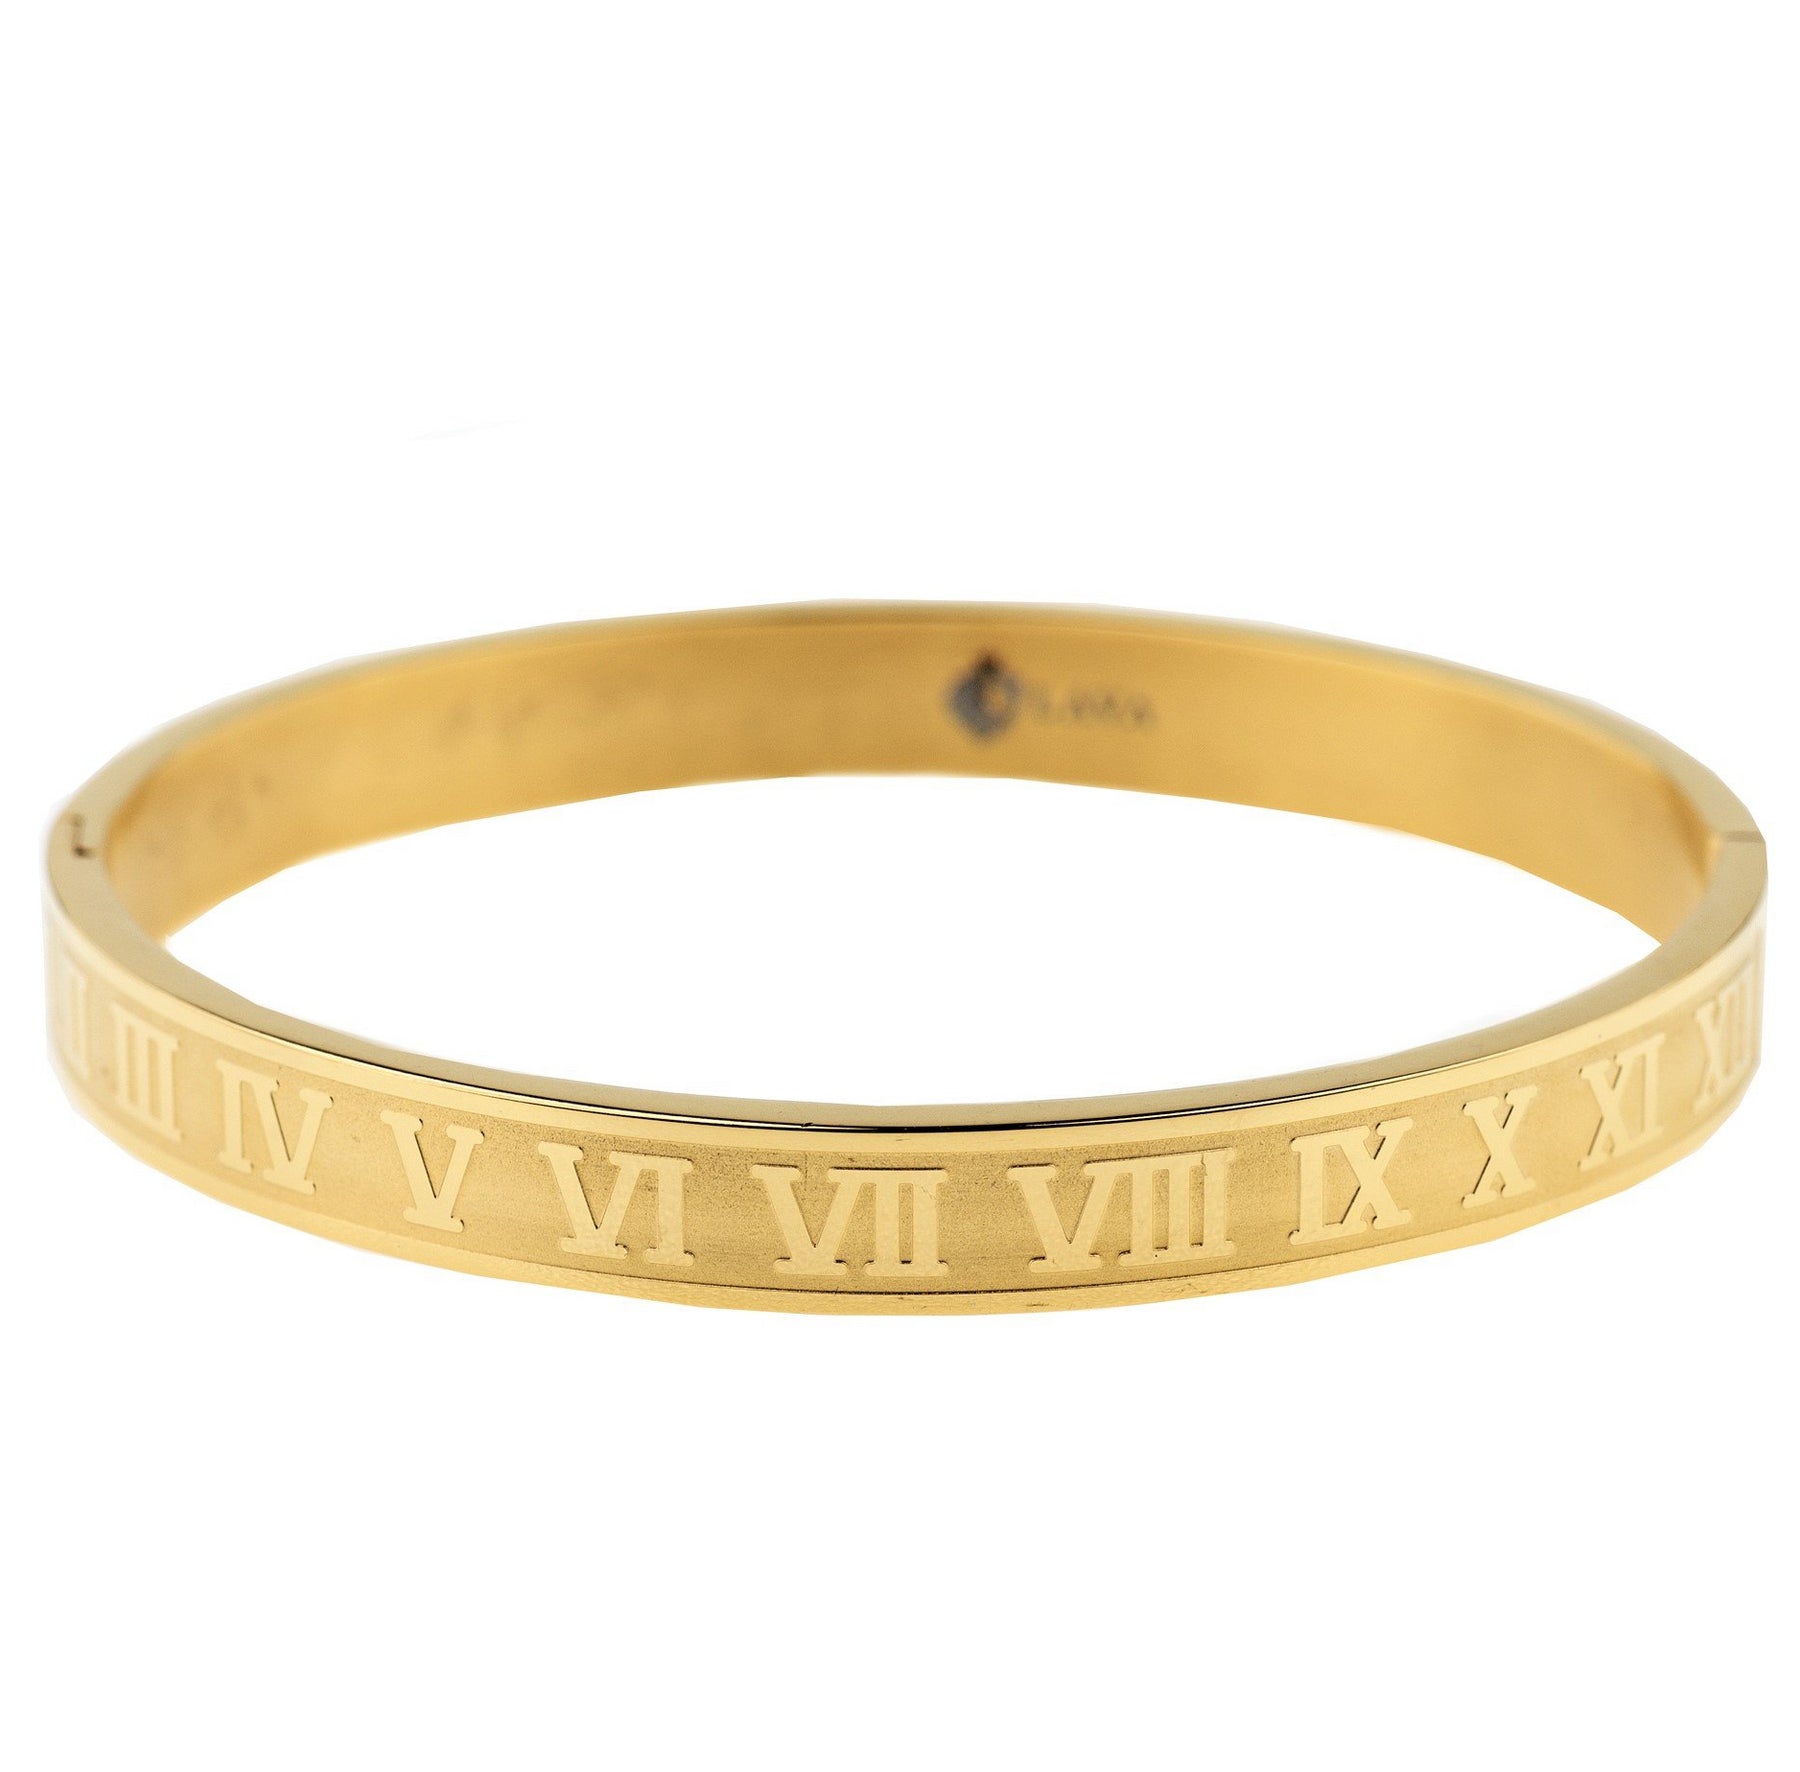 Newest Roman Letter Bangles For Women White Enamel Gold Numeral